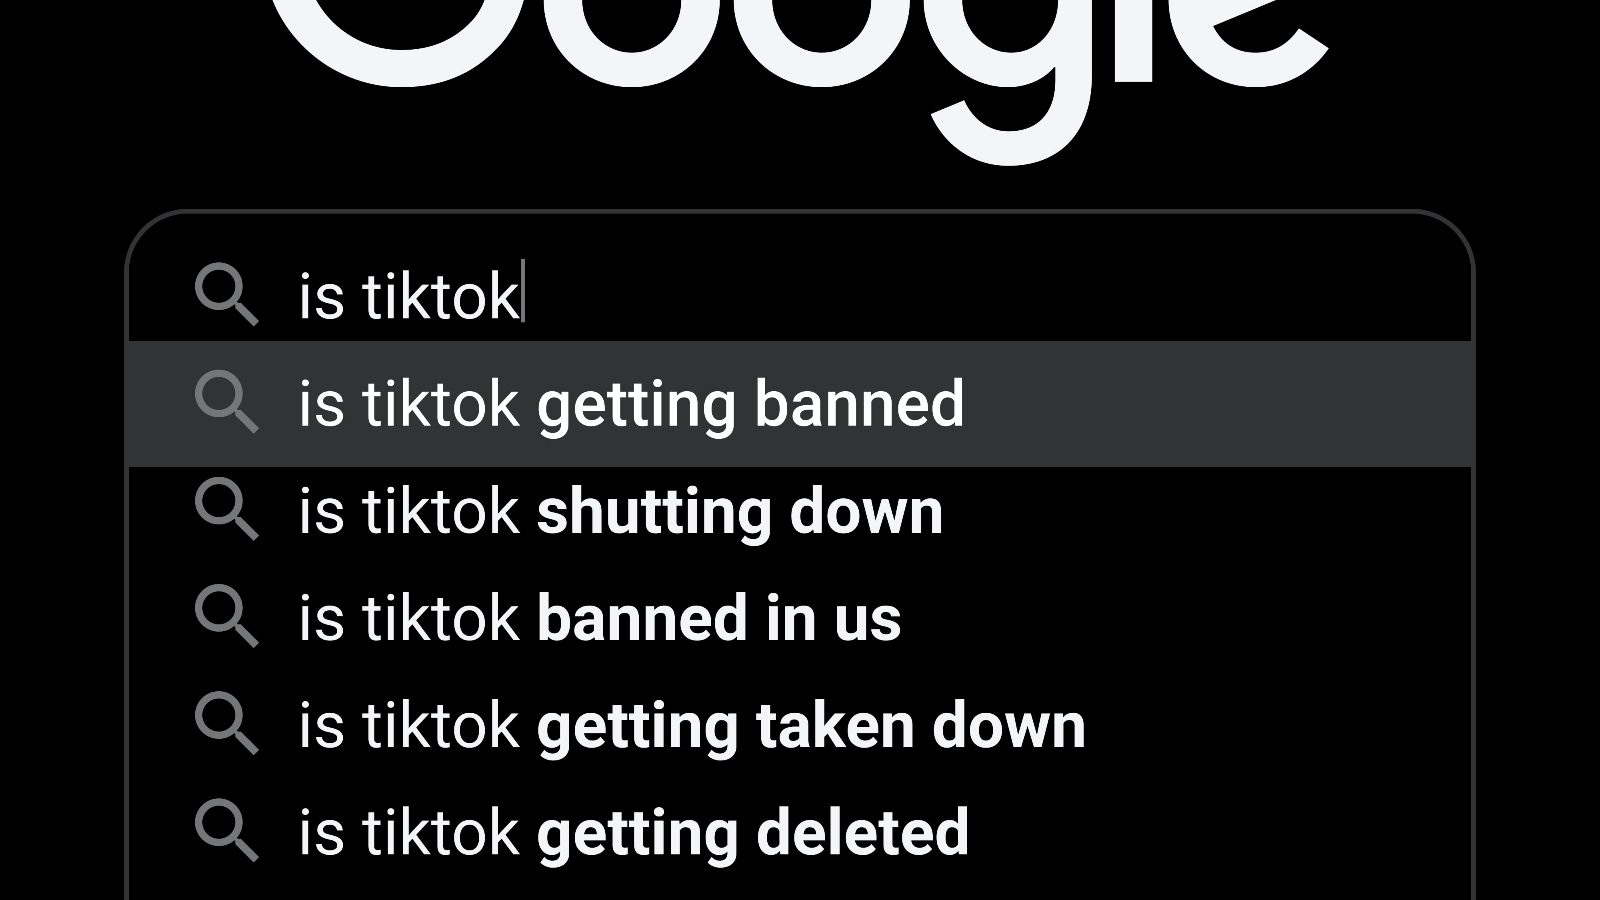 Should We Ban TikTok?